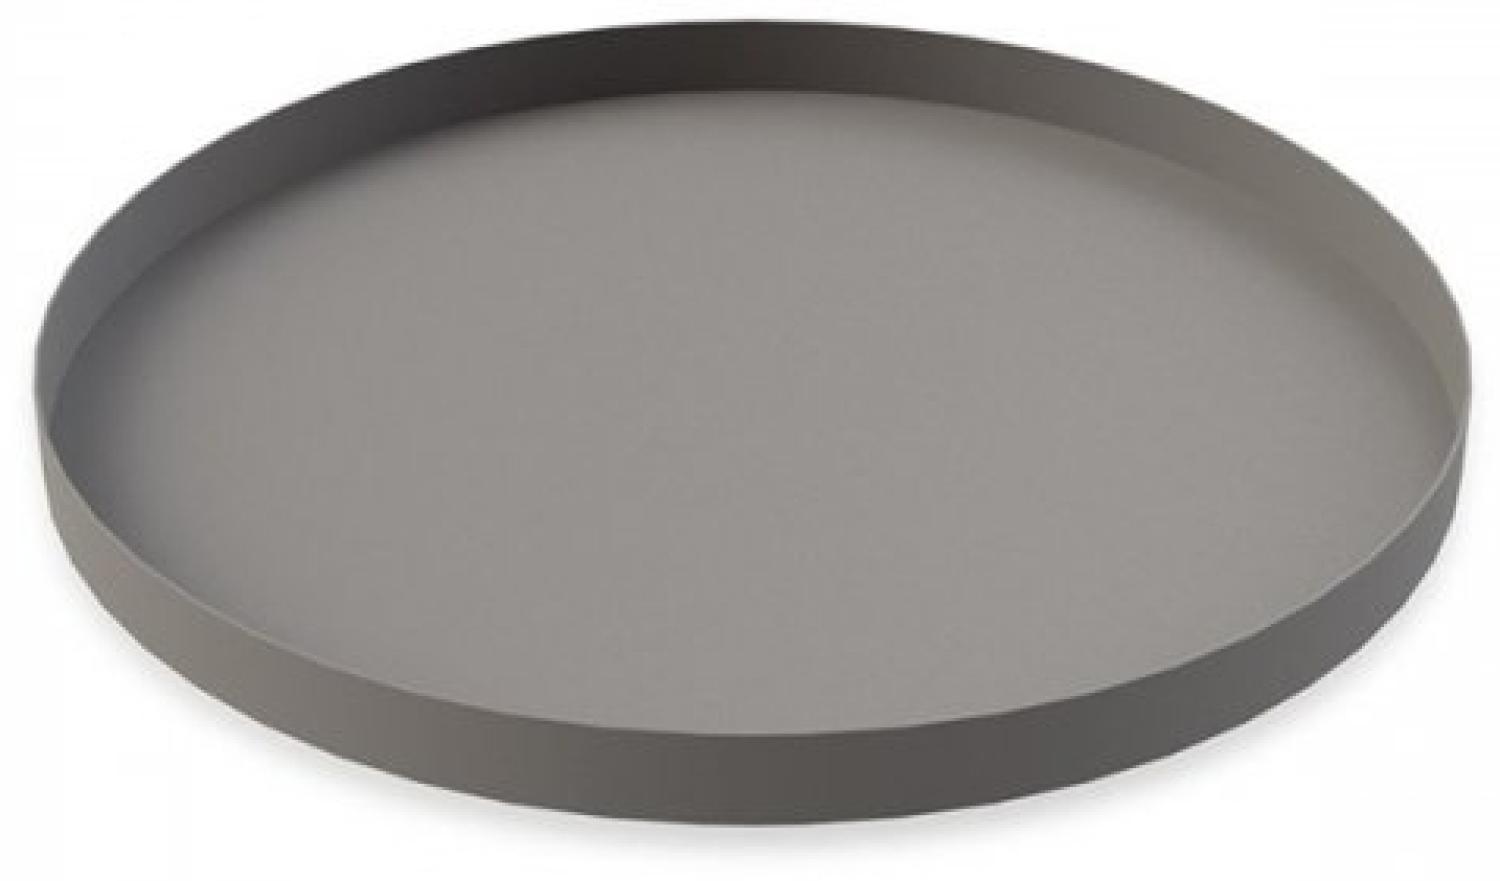 Cooee Design Tablett Circle Grau (40cm) HI-011-GY Bild 1